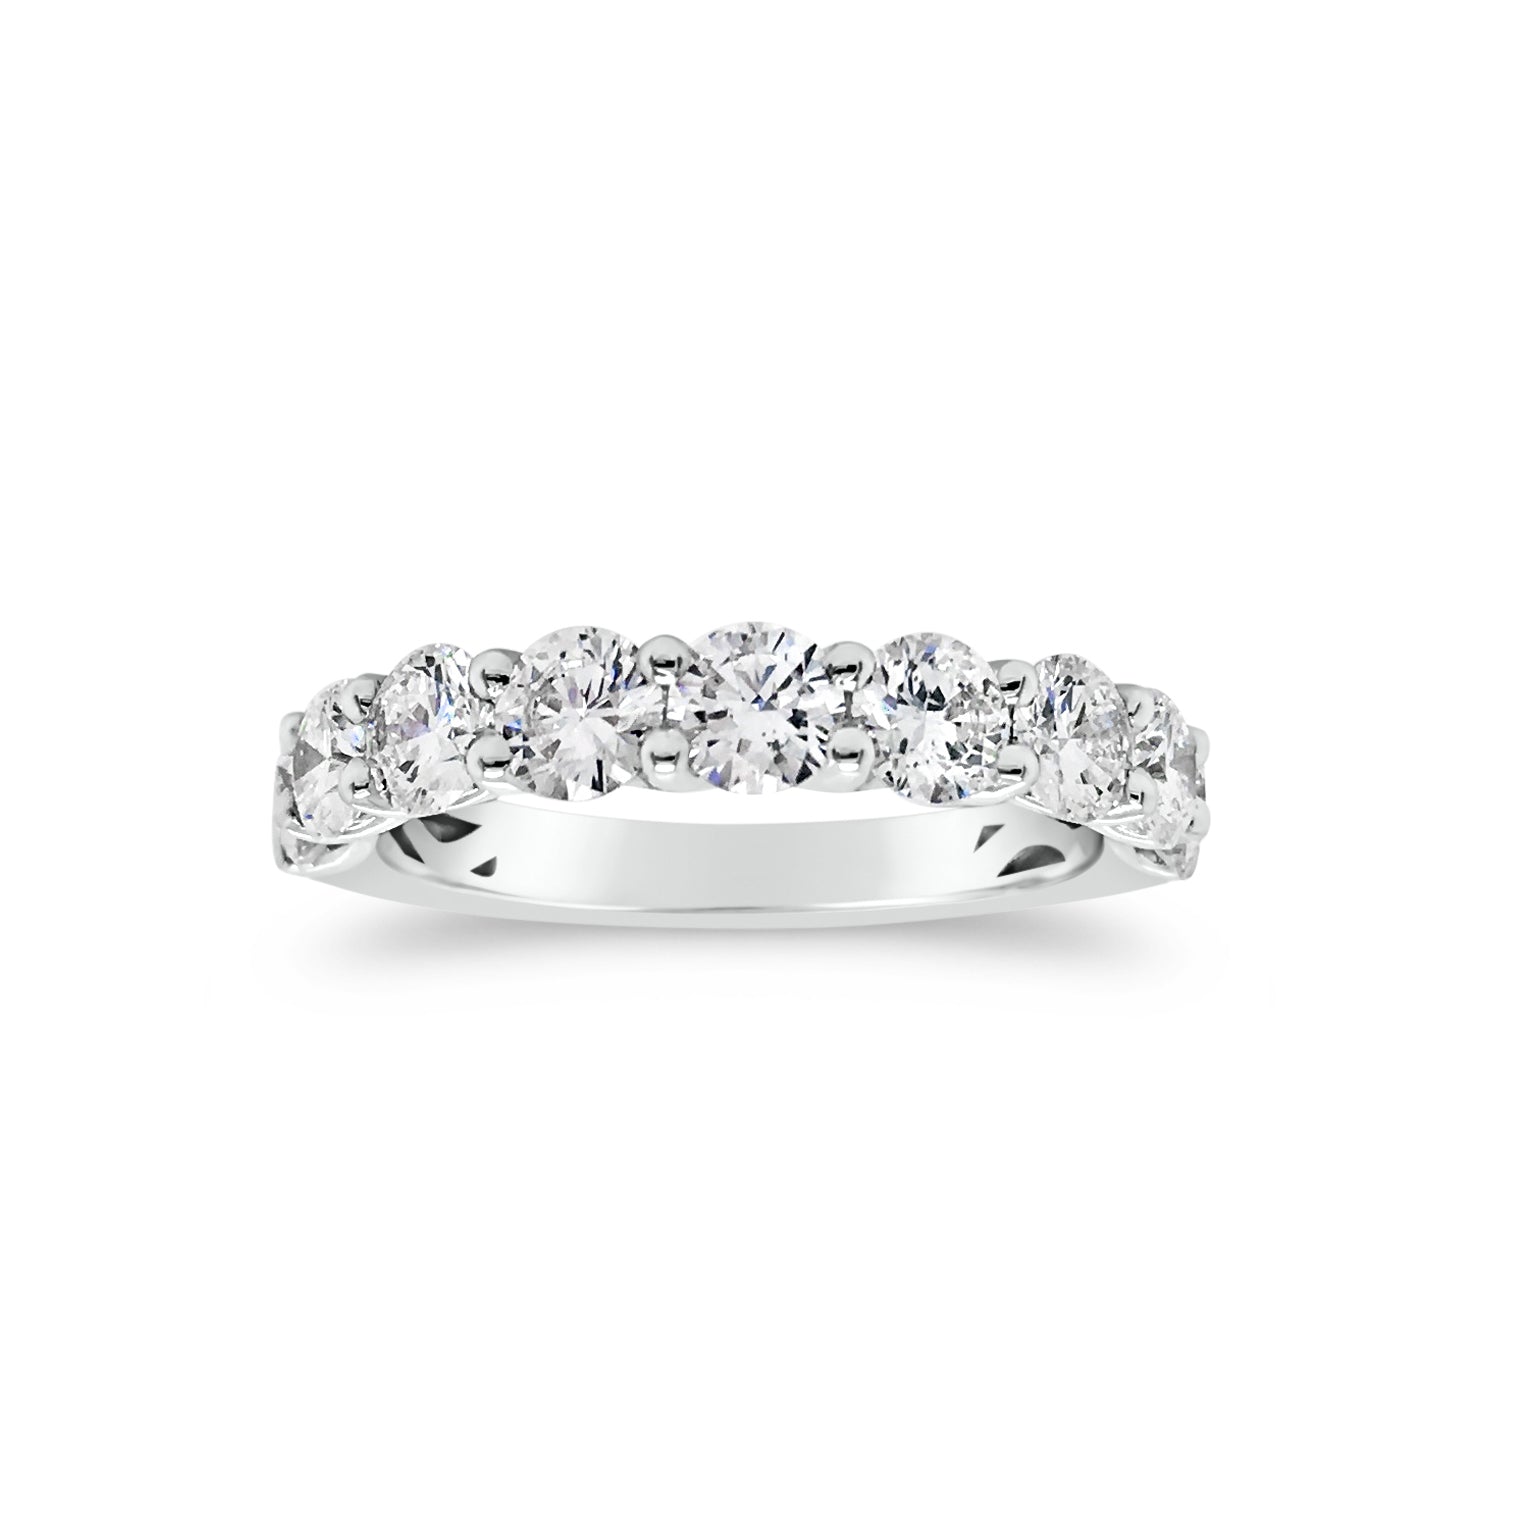 Shared Prong-Set Diamond Wedding Band  -18k gold weighing 3.29 grams  -9 round shared prong-set diamonds 1.68 carats